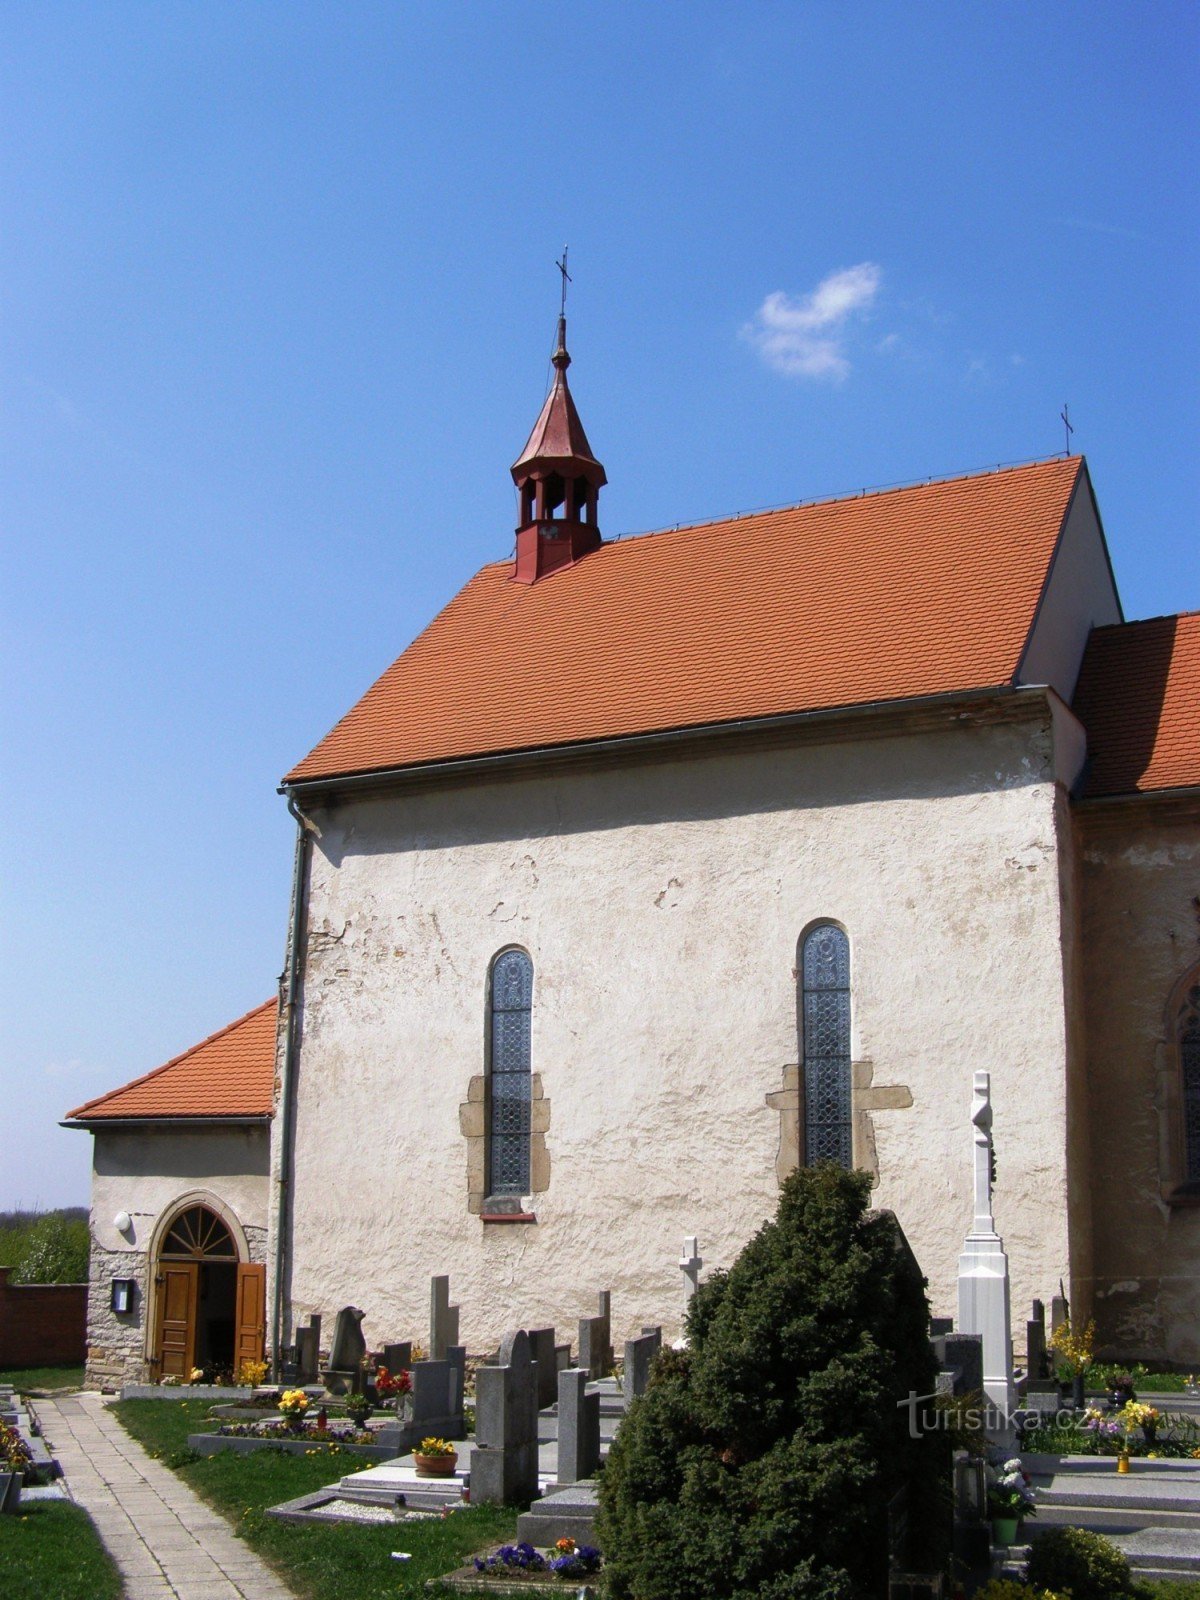 Černčice - church of St. Jacob with the belfry